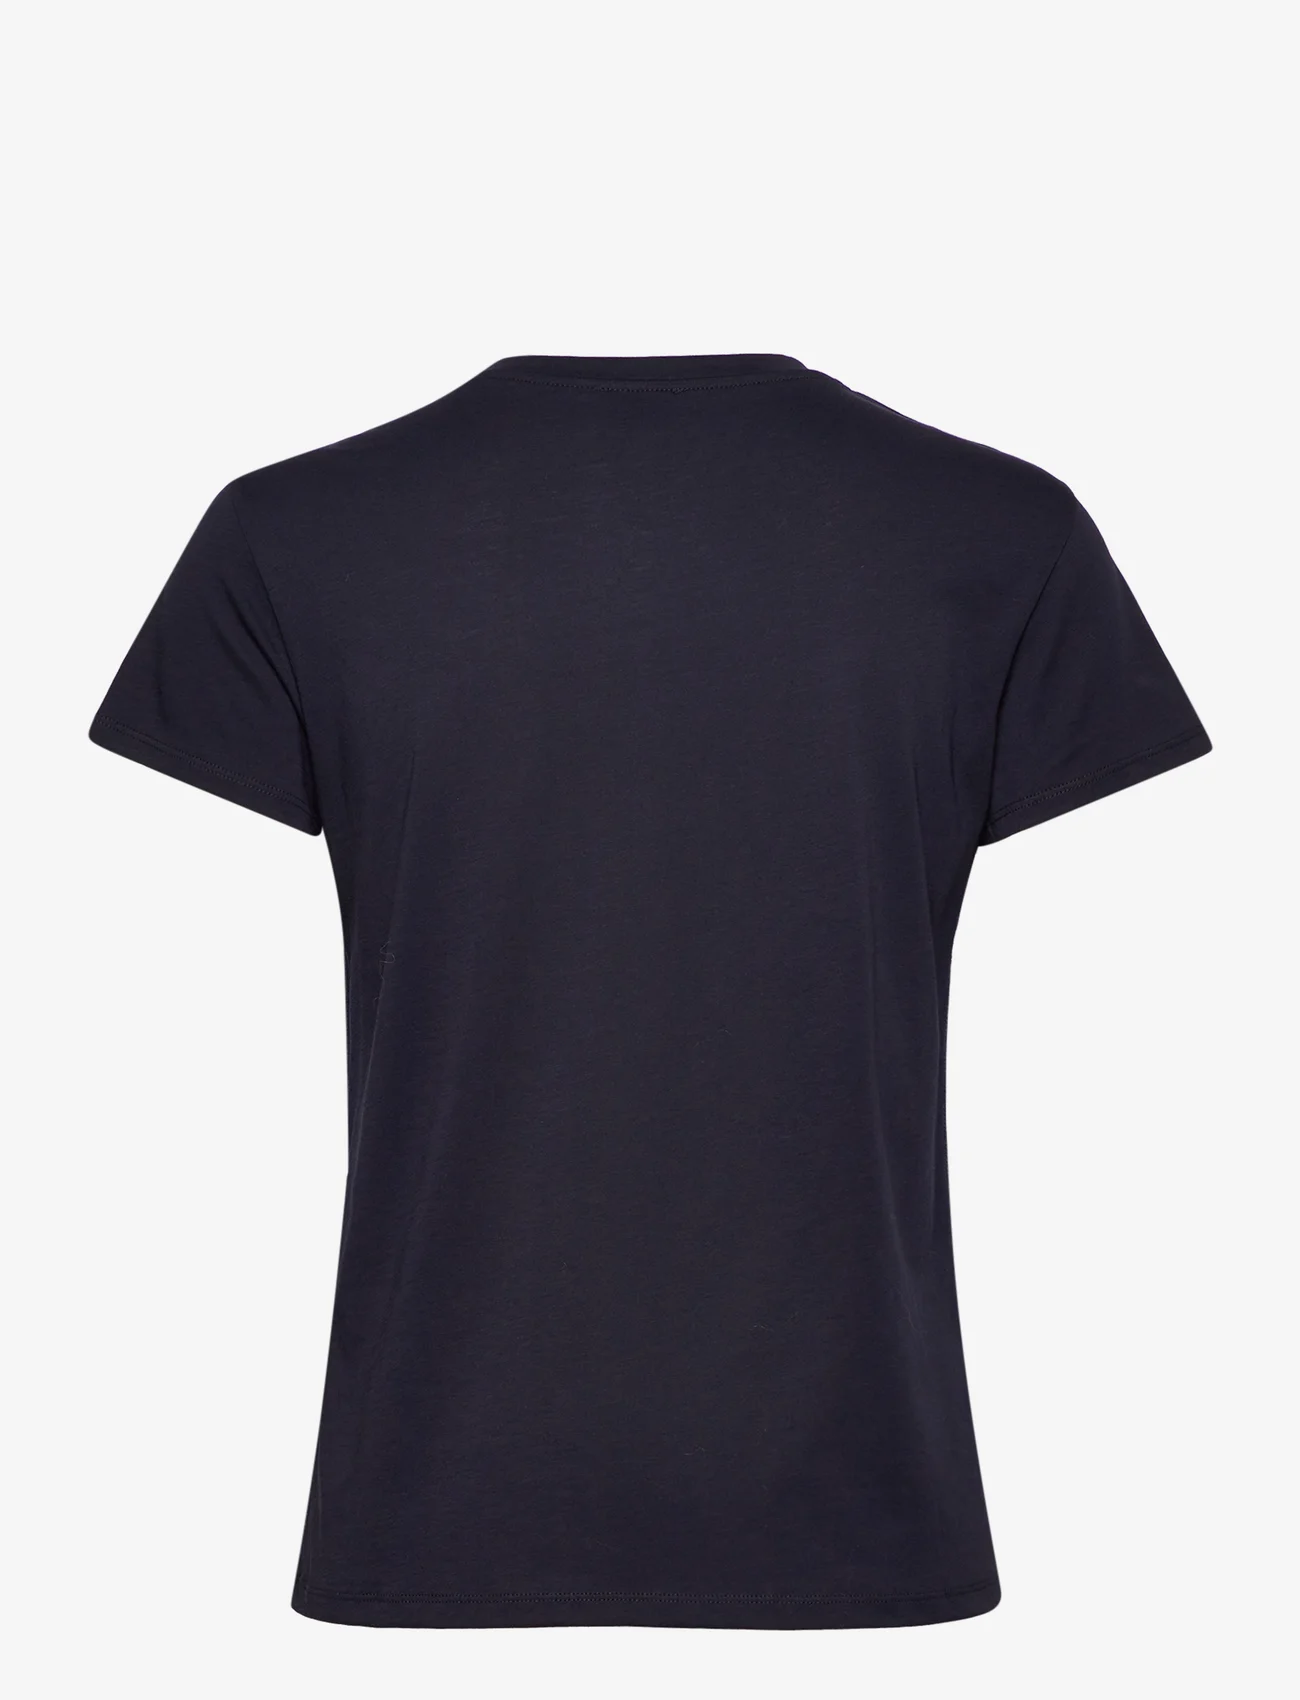 Filippa K - Soft Cotton Tee - t-shirts - navy - 1